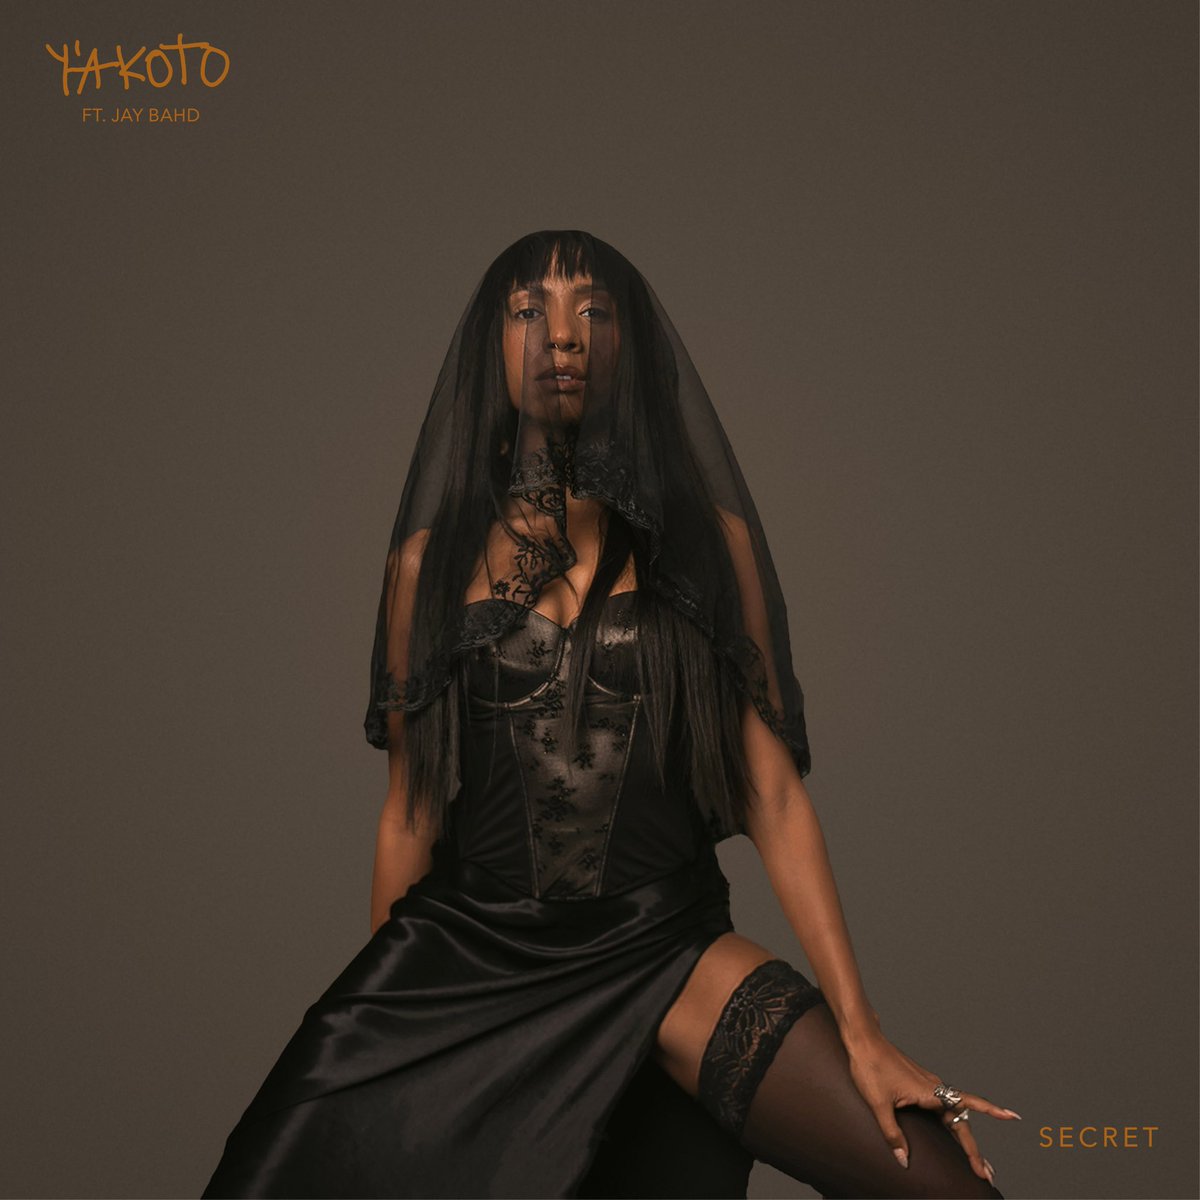 Y’akoto – Secret ft Jay Bahd mp3 download